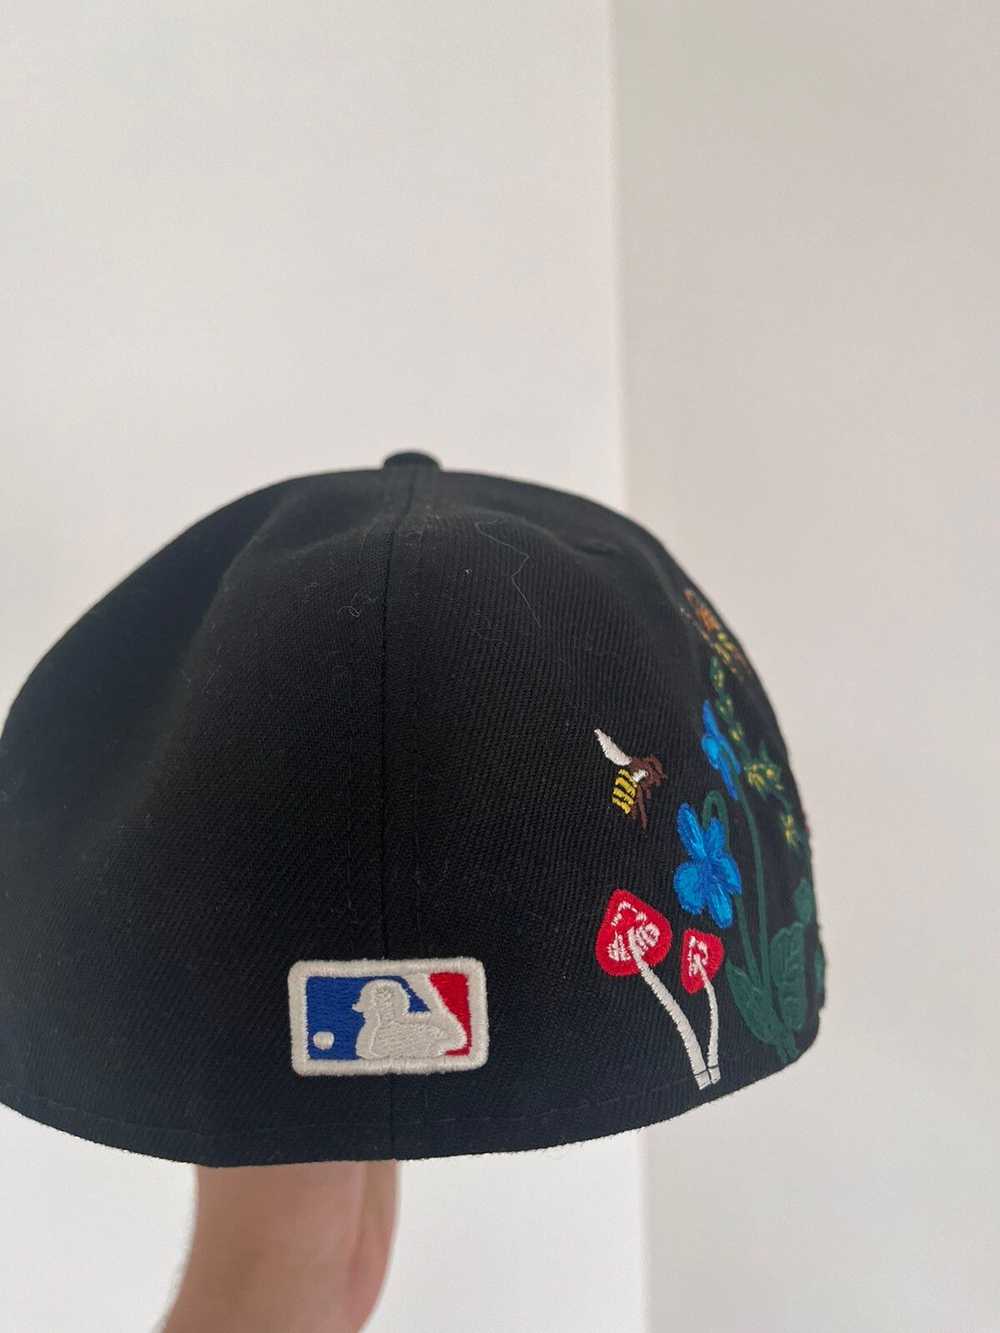 New Era Black Sox Floral hat - image 5